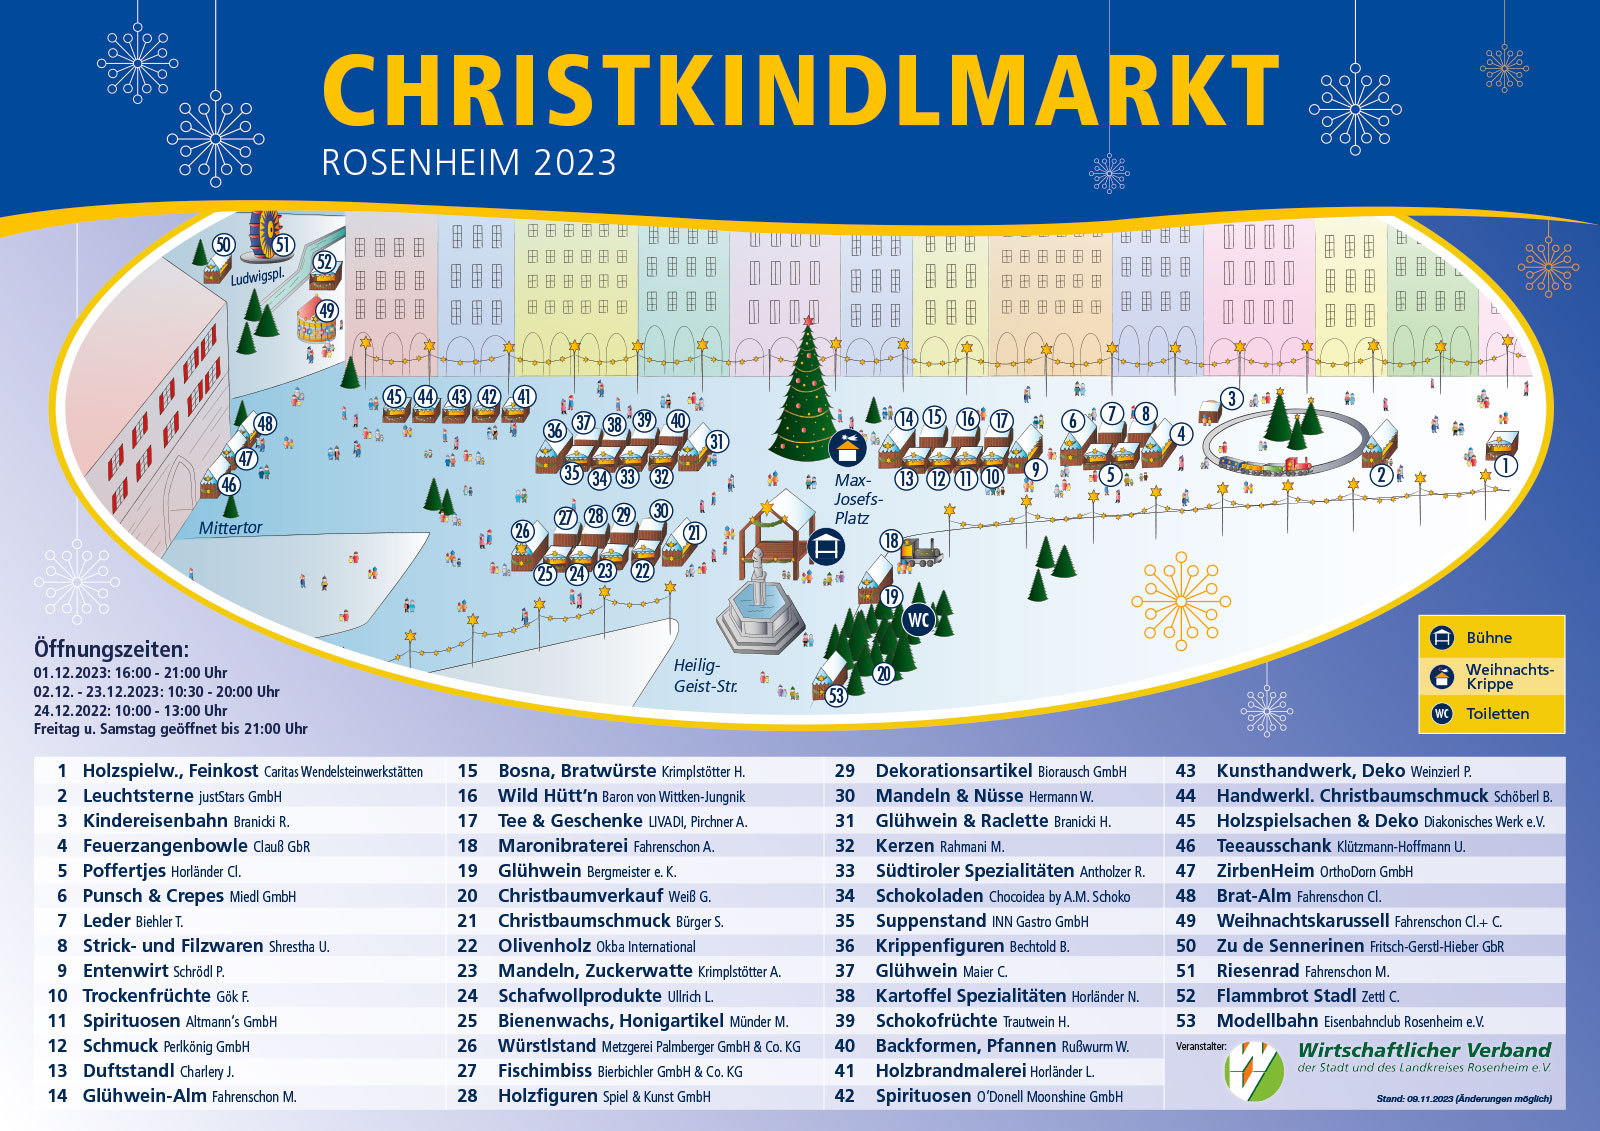 Übersichtsplan des Christkindlmarktes Rosenheim